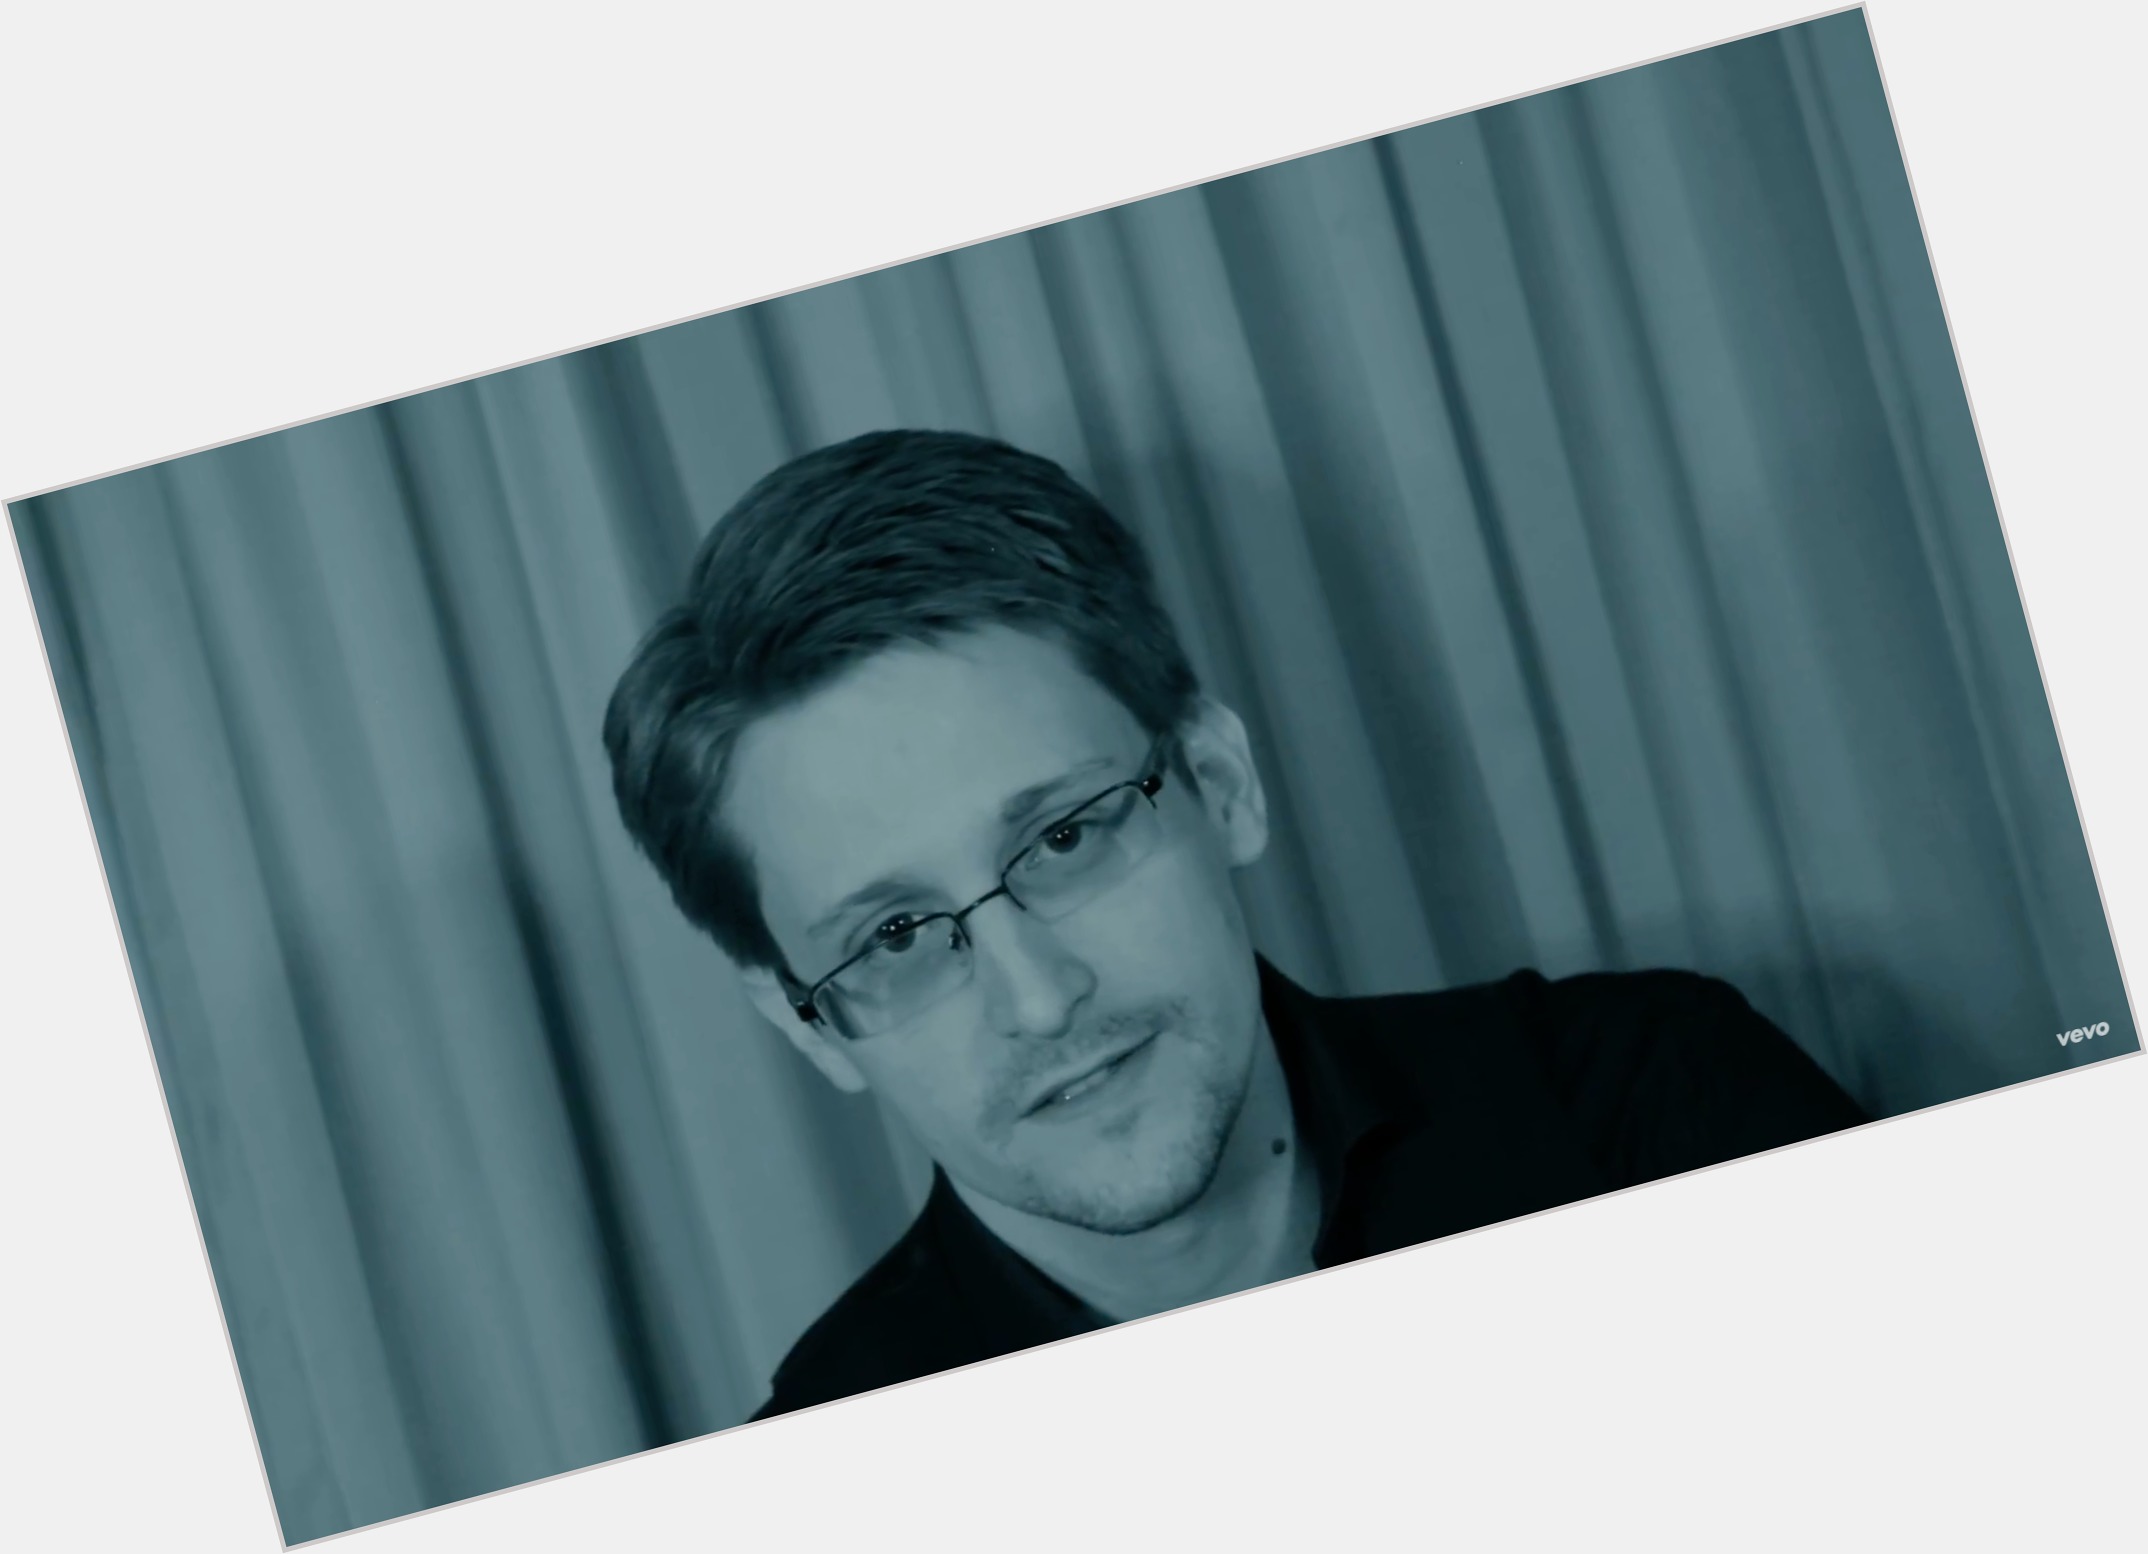 Edward Snowden full body 3.jpg